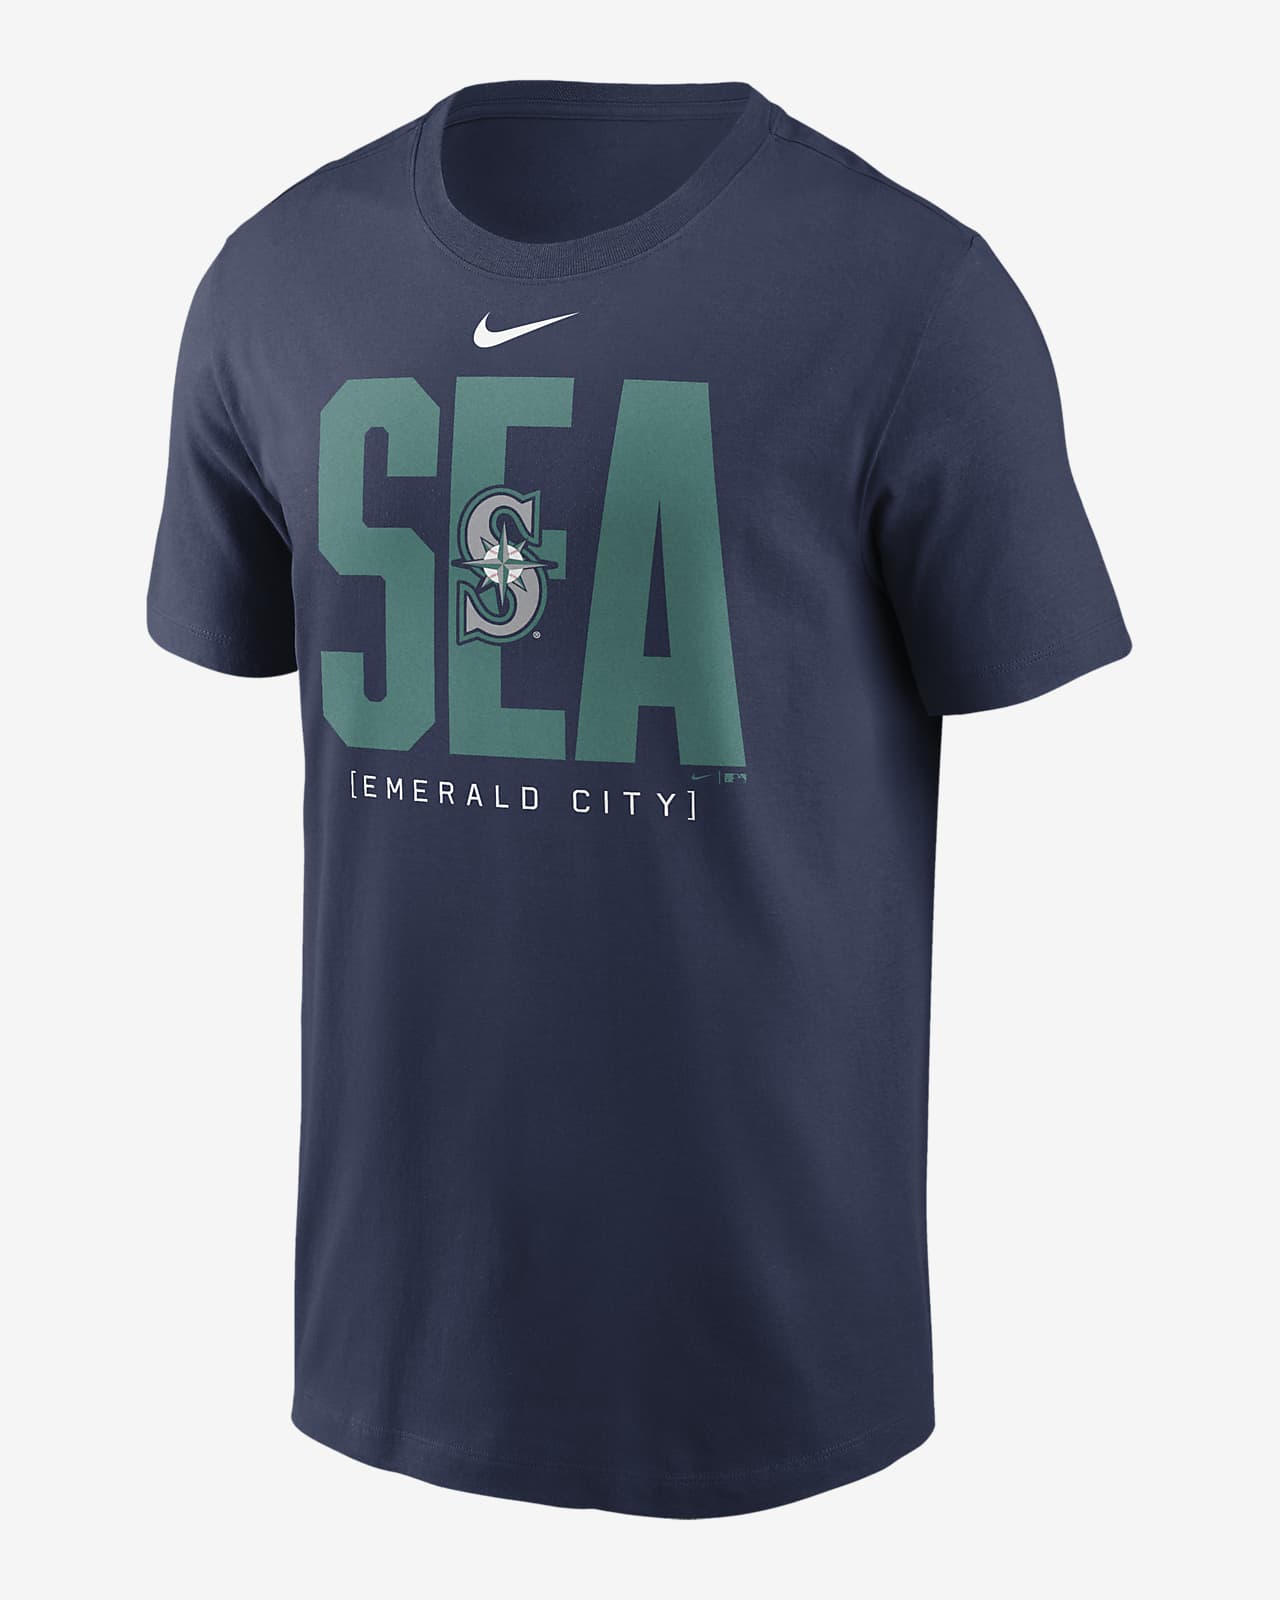 Seattle Mariners Team Scoreboard Men's Nike MLB T-Shirt